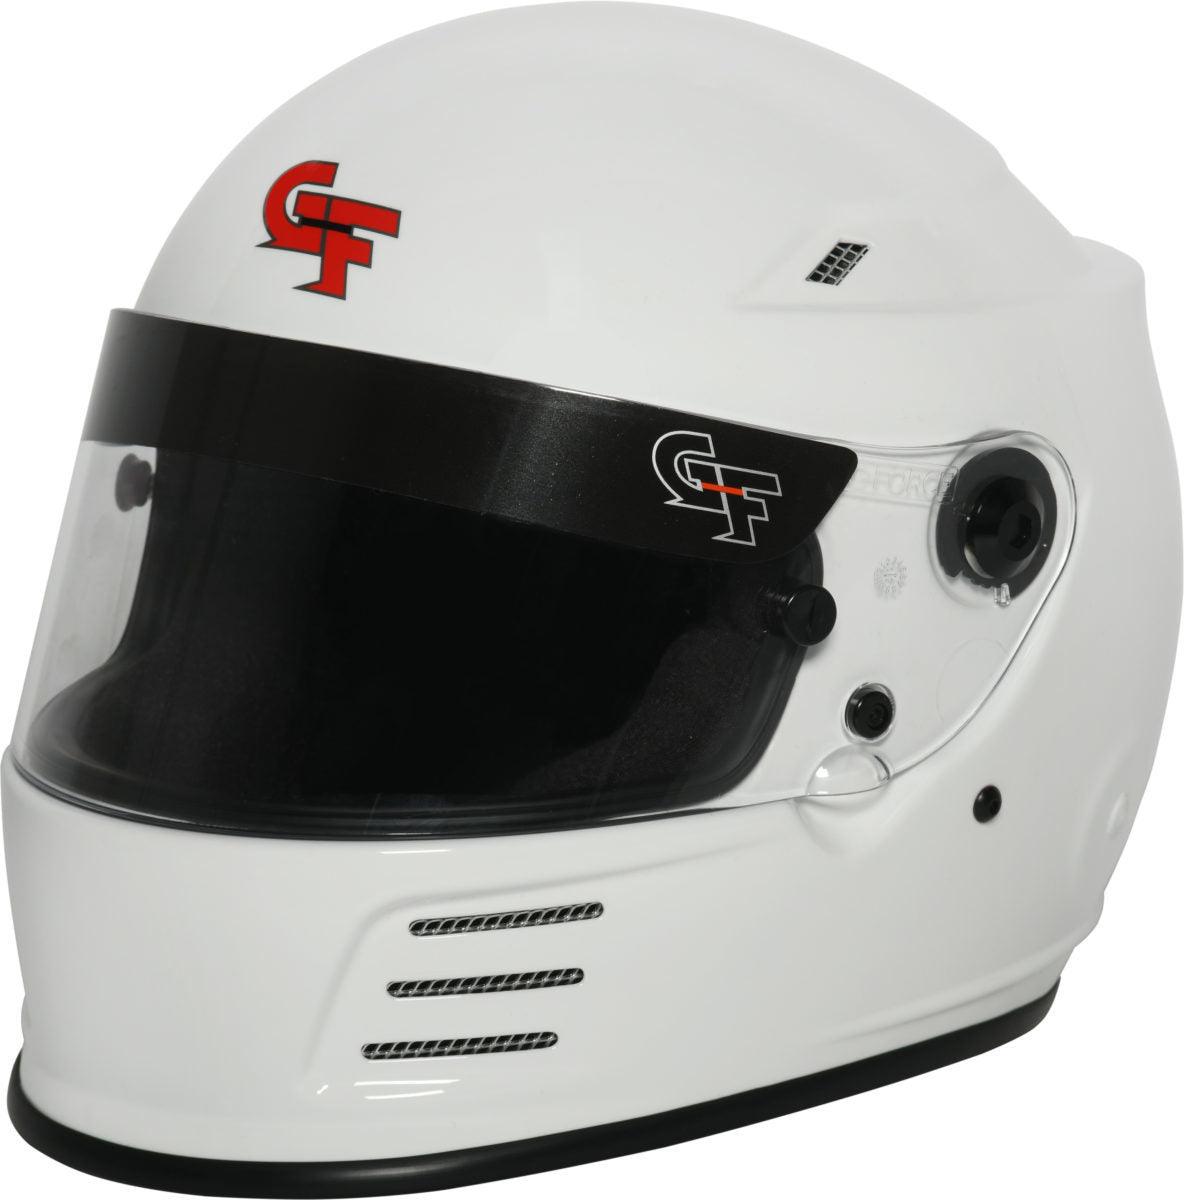 Helmet Revo Small White SA2020 - Burlile Performance Products